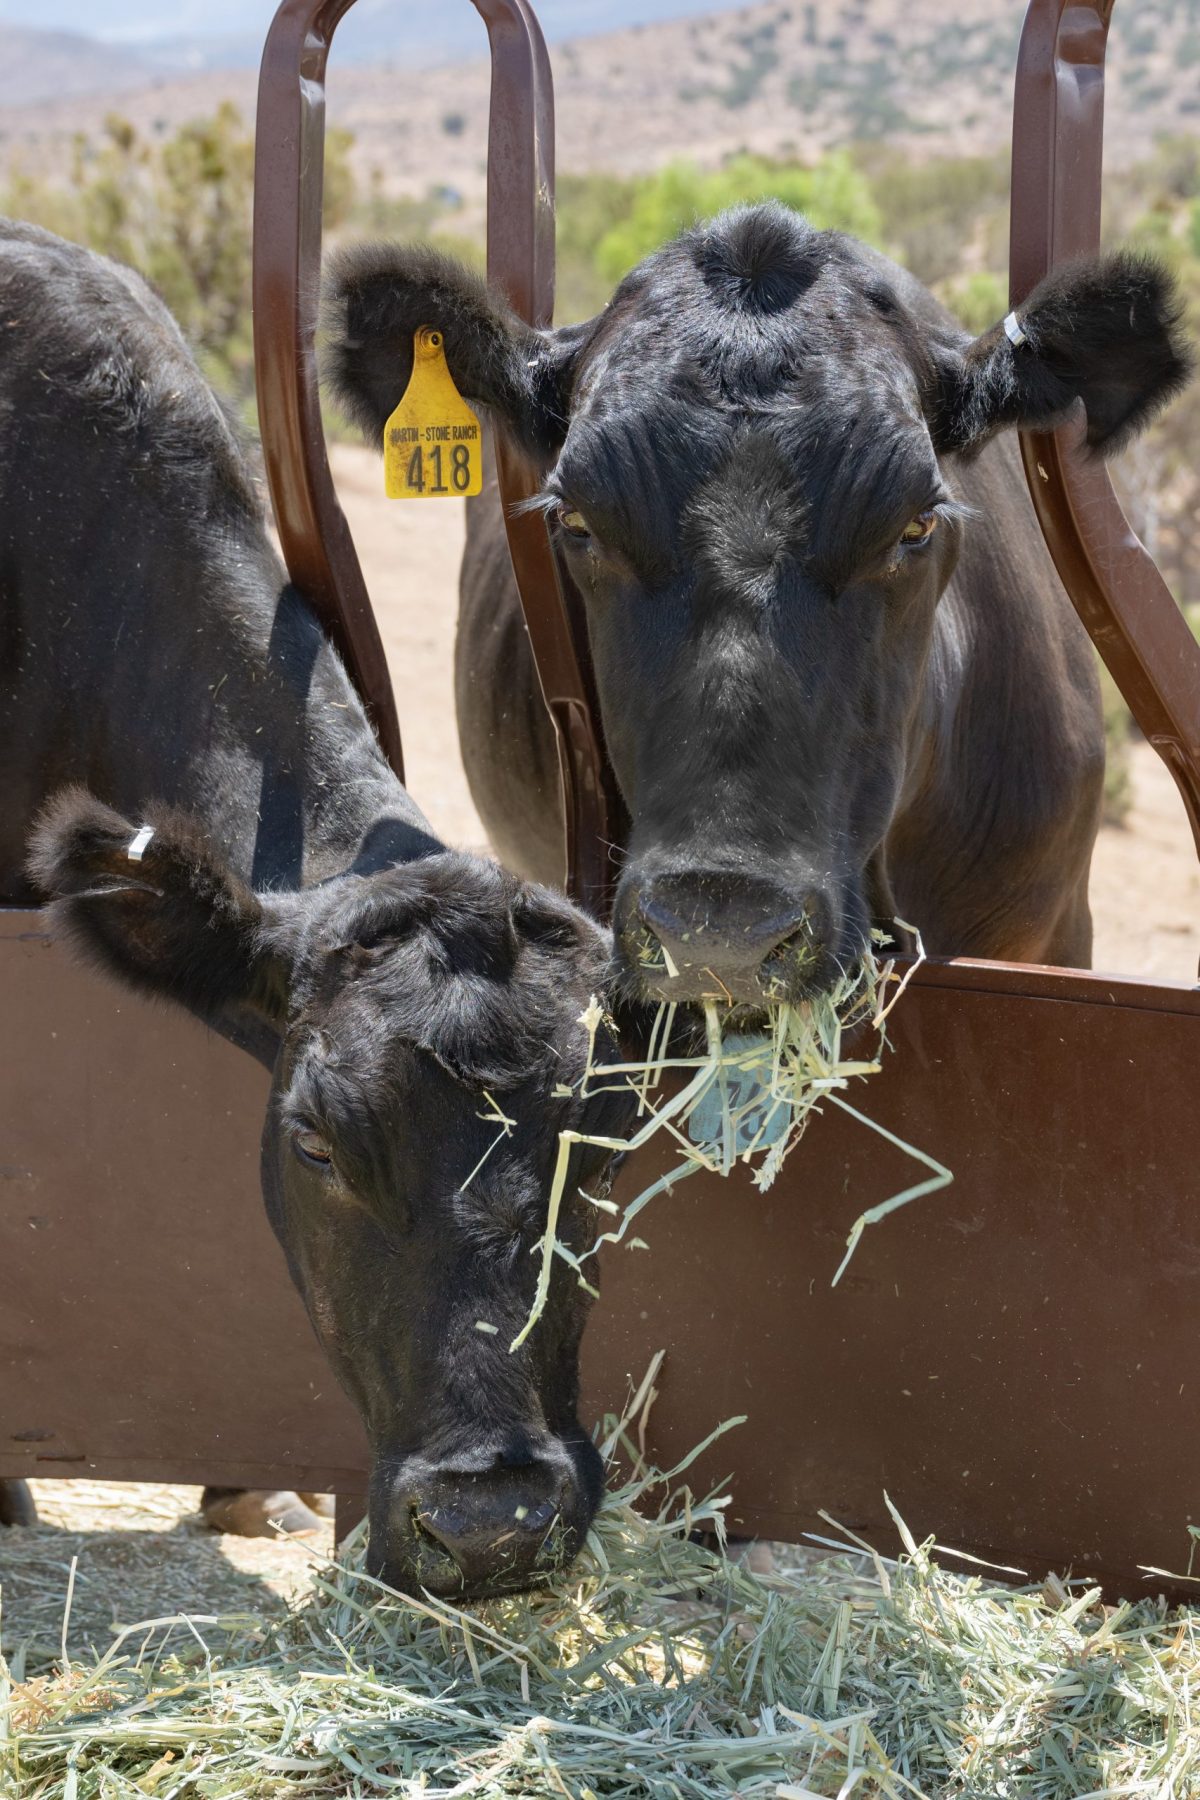 June B. Free and Susan Cows eating hay at Farm Sanctuary